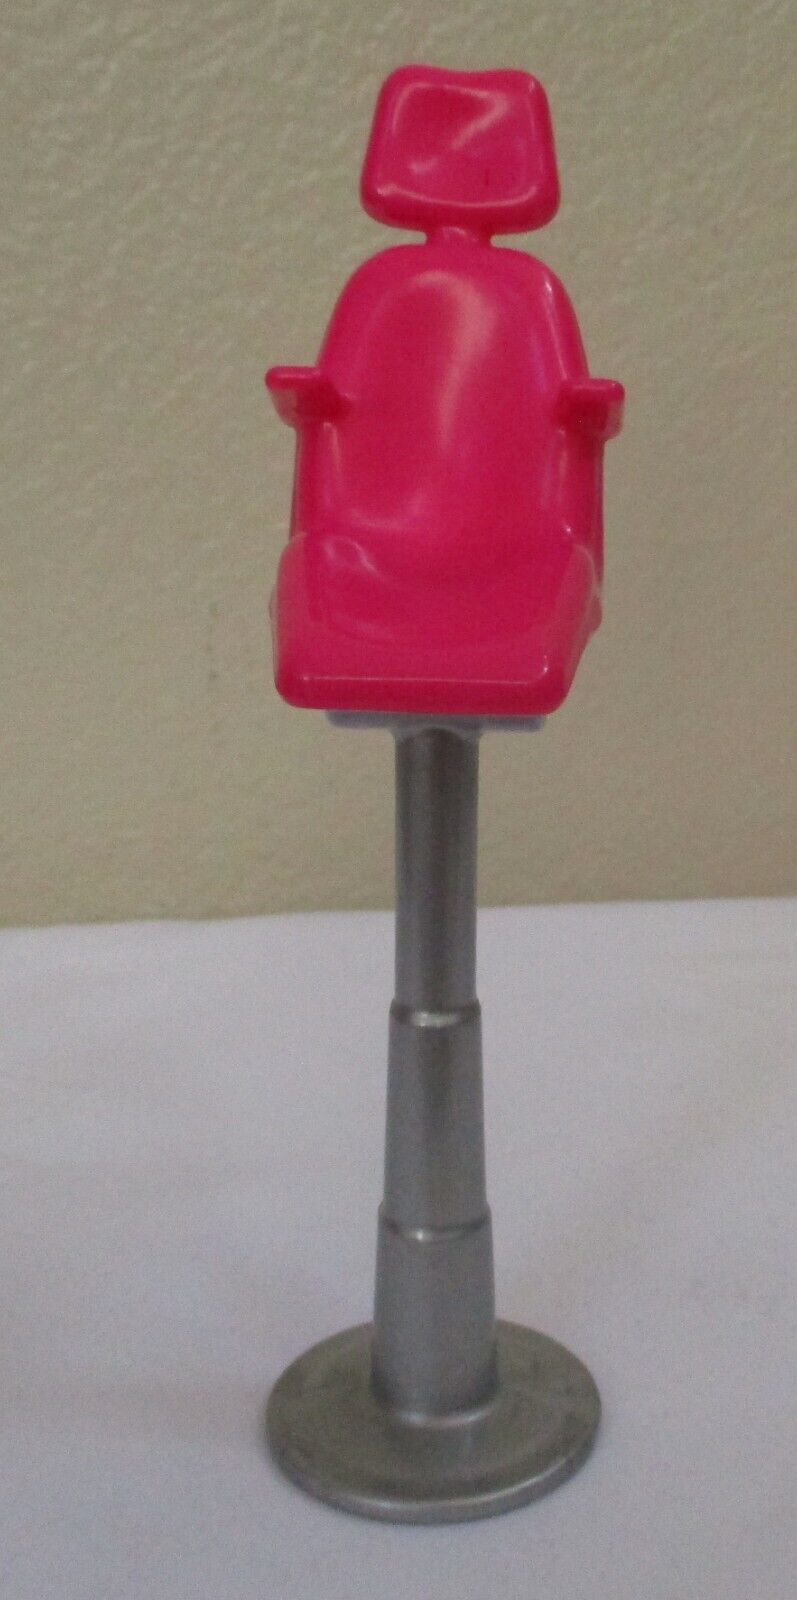 Mattel Barbie Dentist Reclining Chair Fuchsia Pink & Silver - $8.41